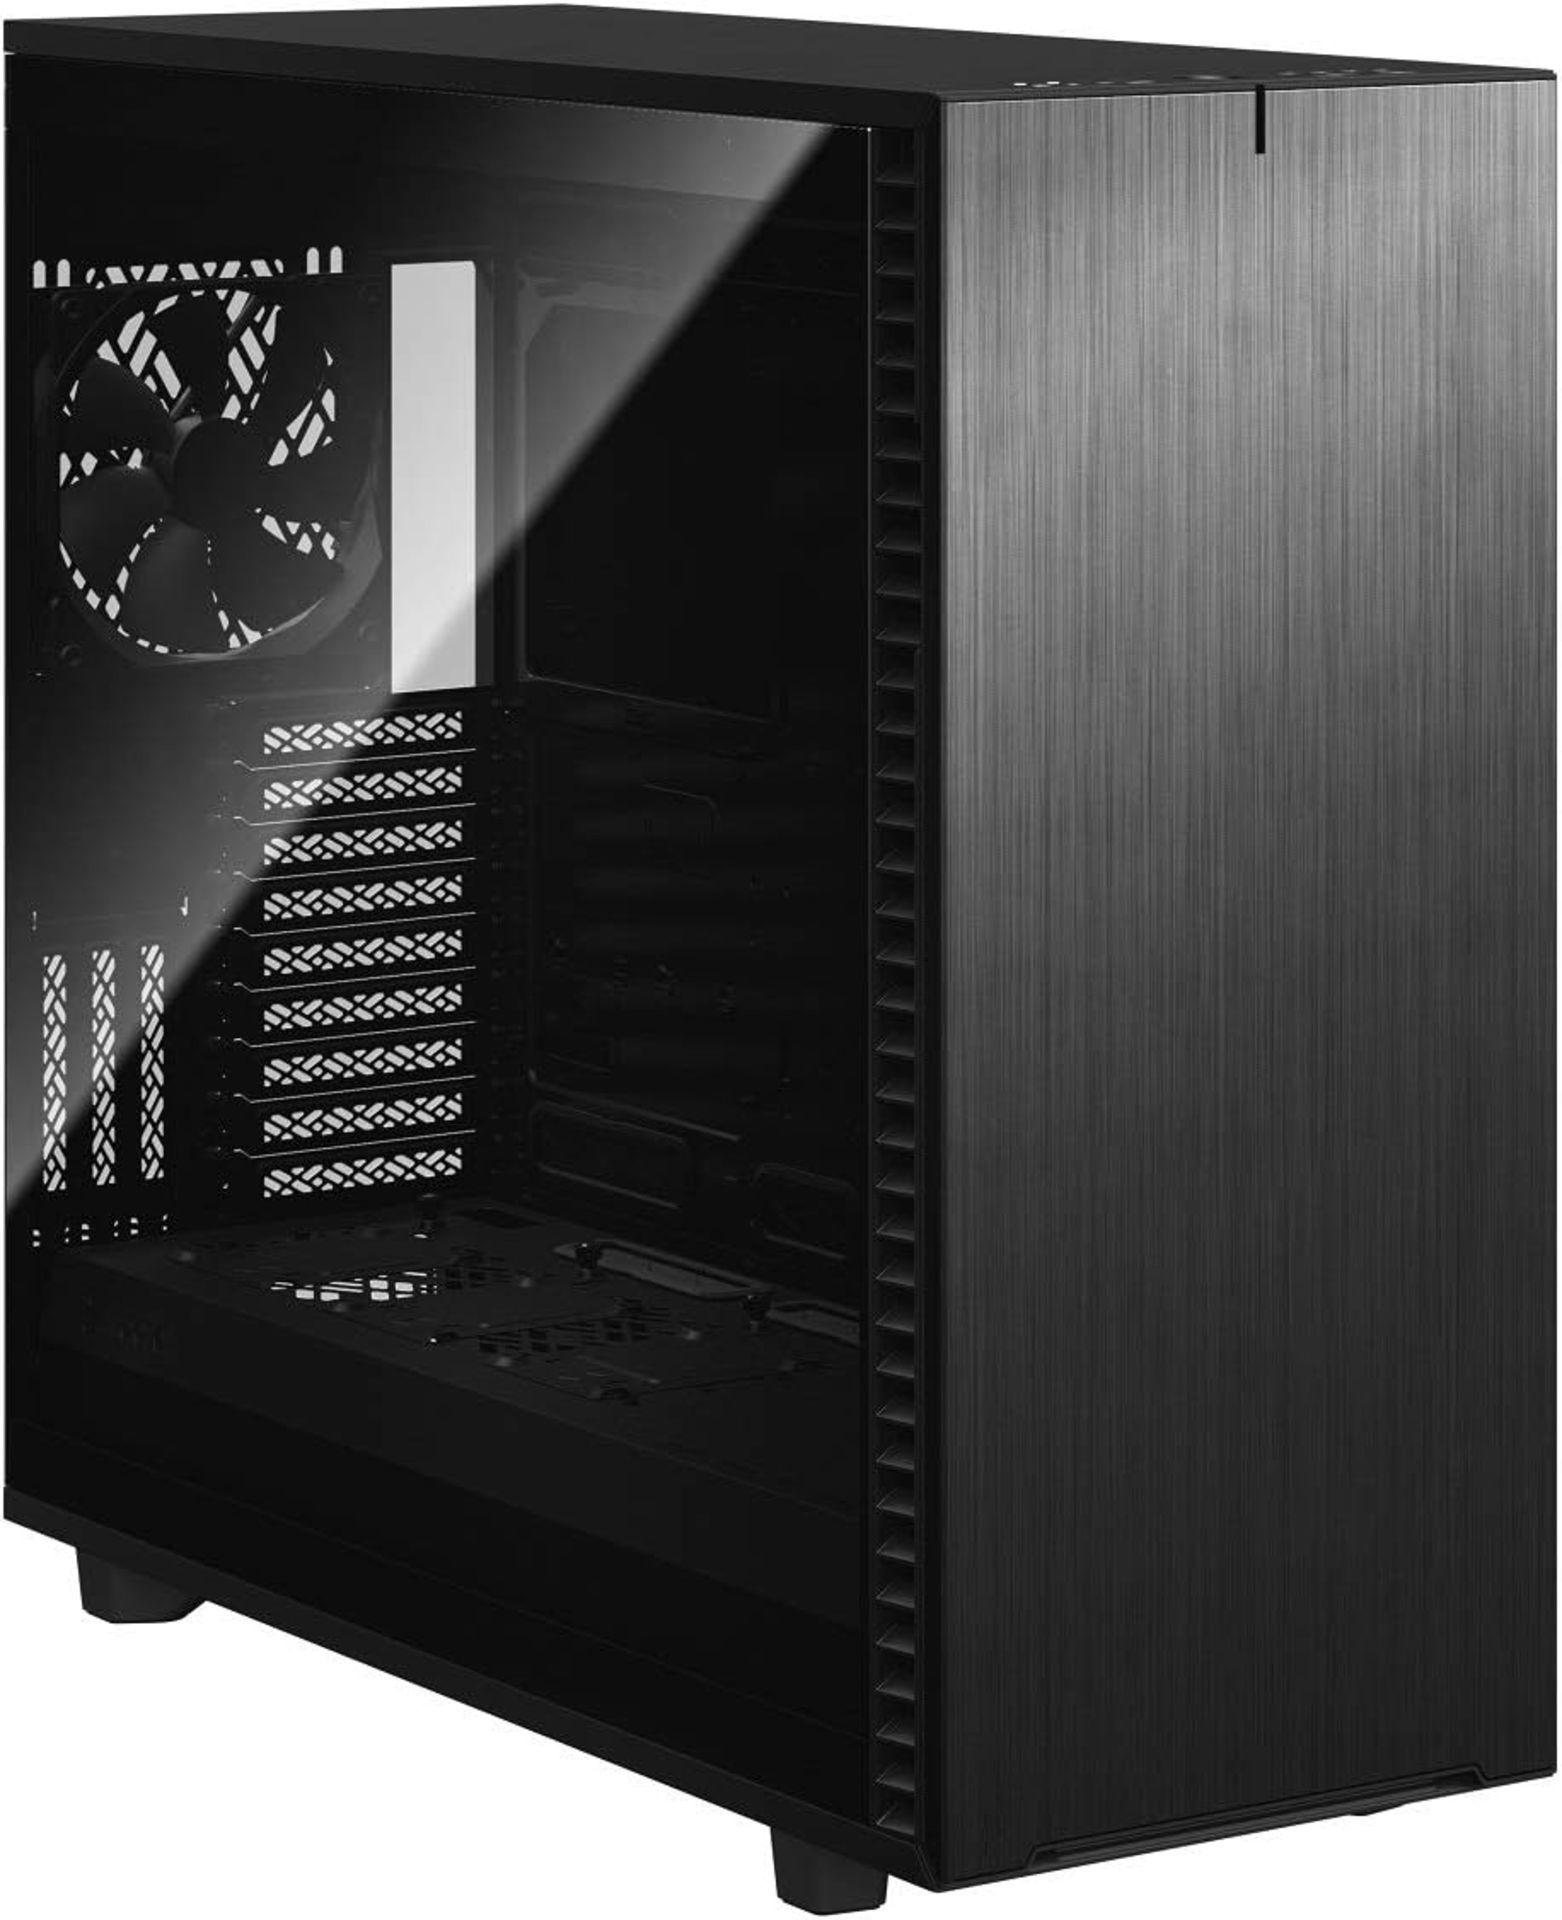 BRAND NEW FACTORY SEALED FRACTAL Design Define 7 XL Full Tower Case - BLACK. RRP £195.99. (PCK4).